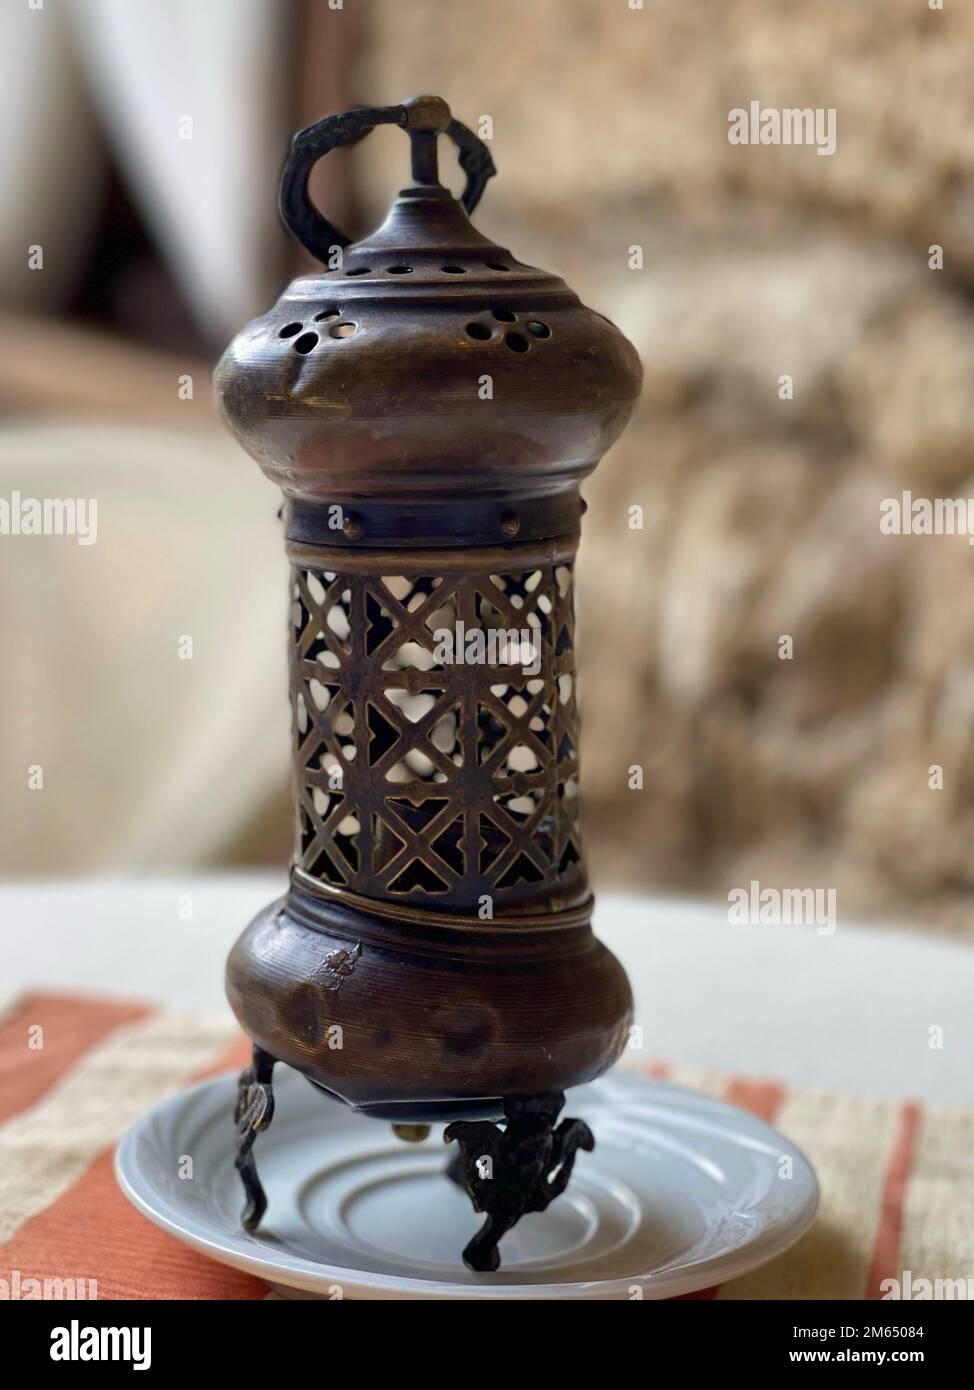 Ornamented metal oriental candlestick on a saucer. Bronze. Brass. Muslim decor. Stock Photo